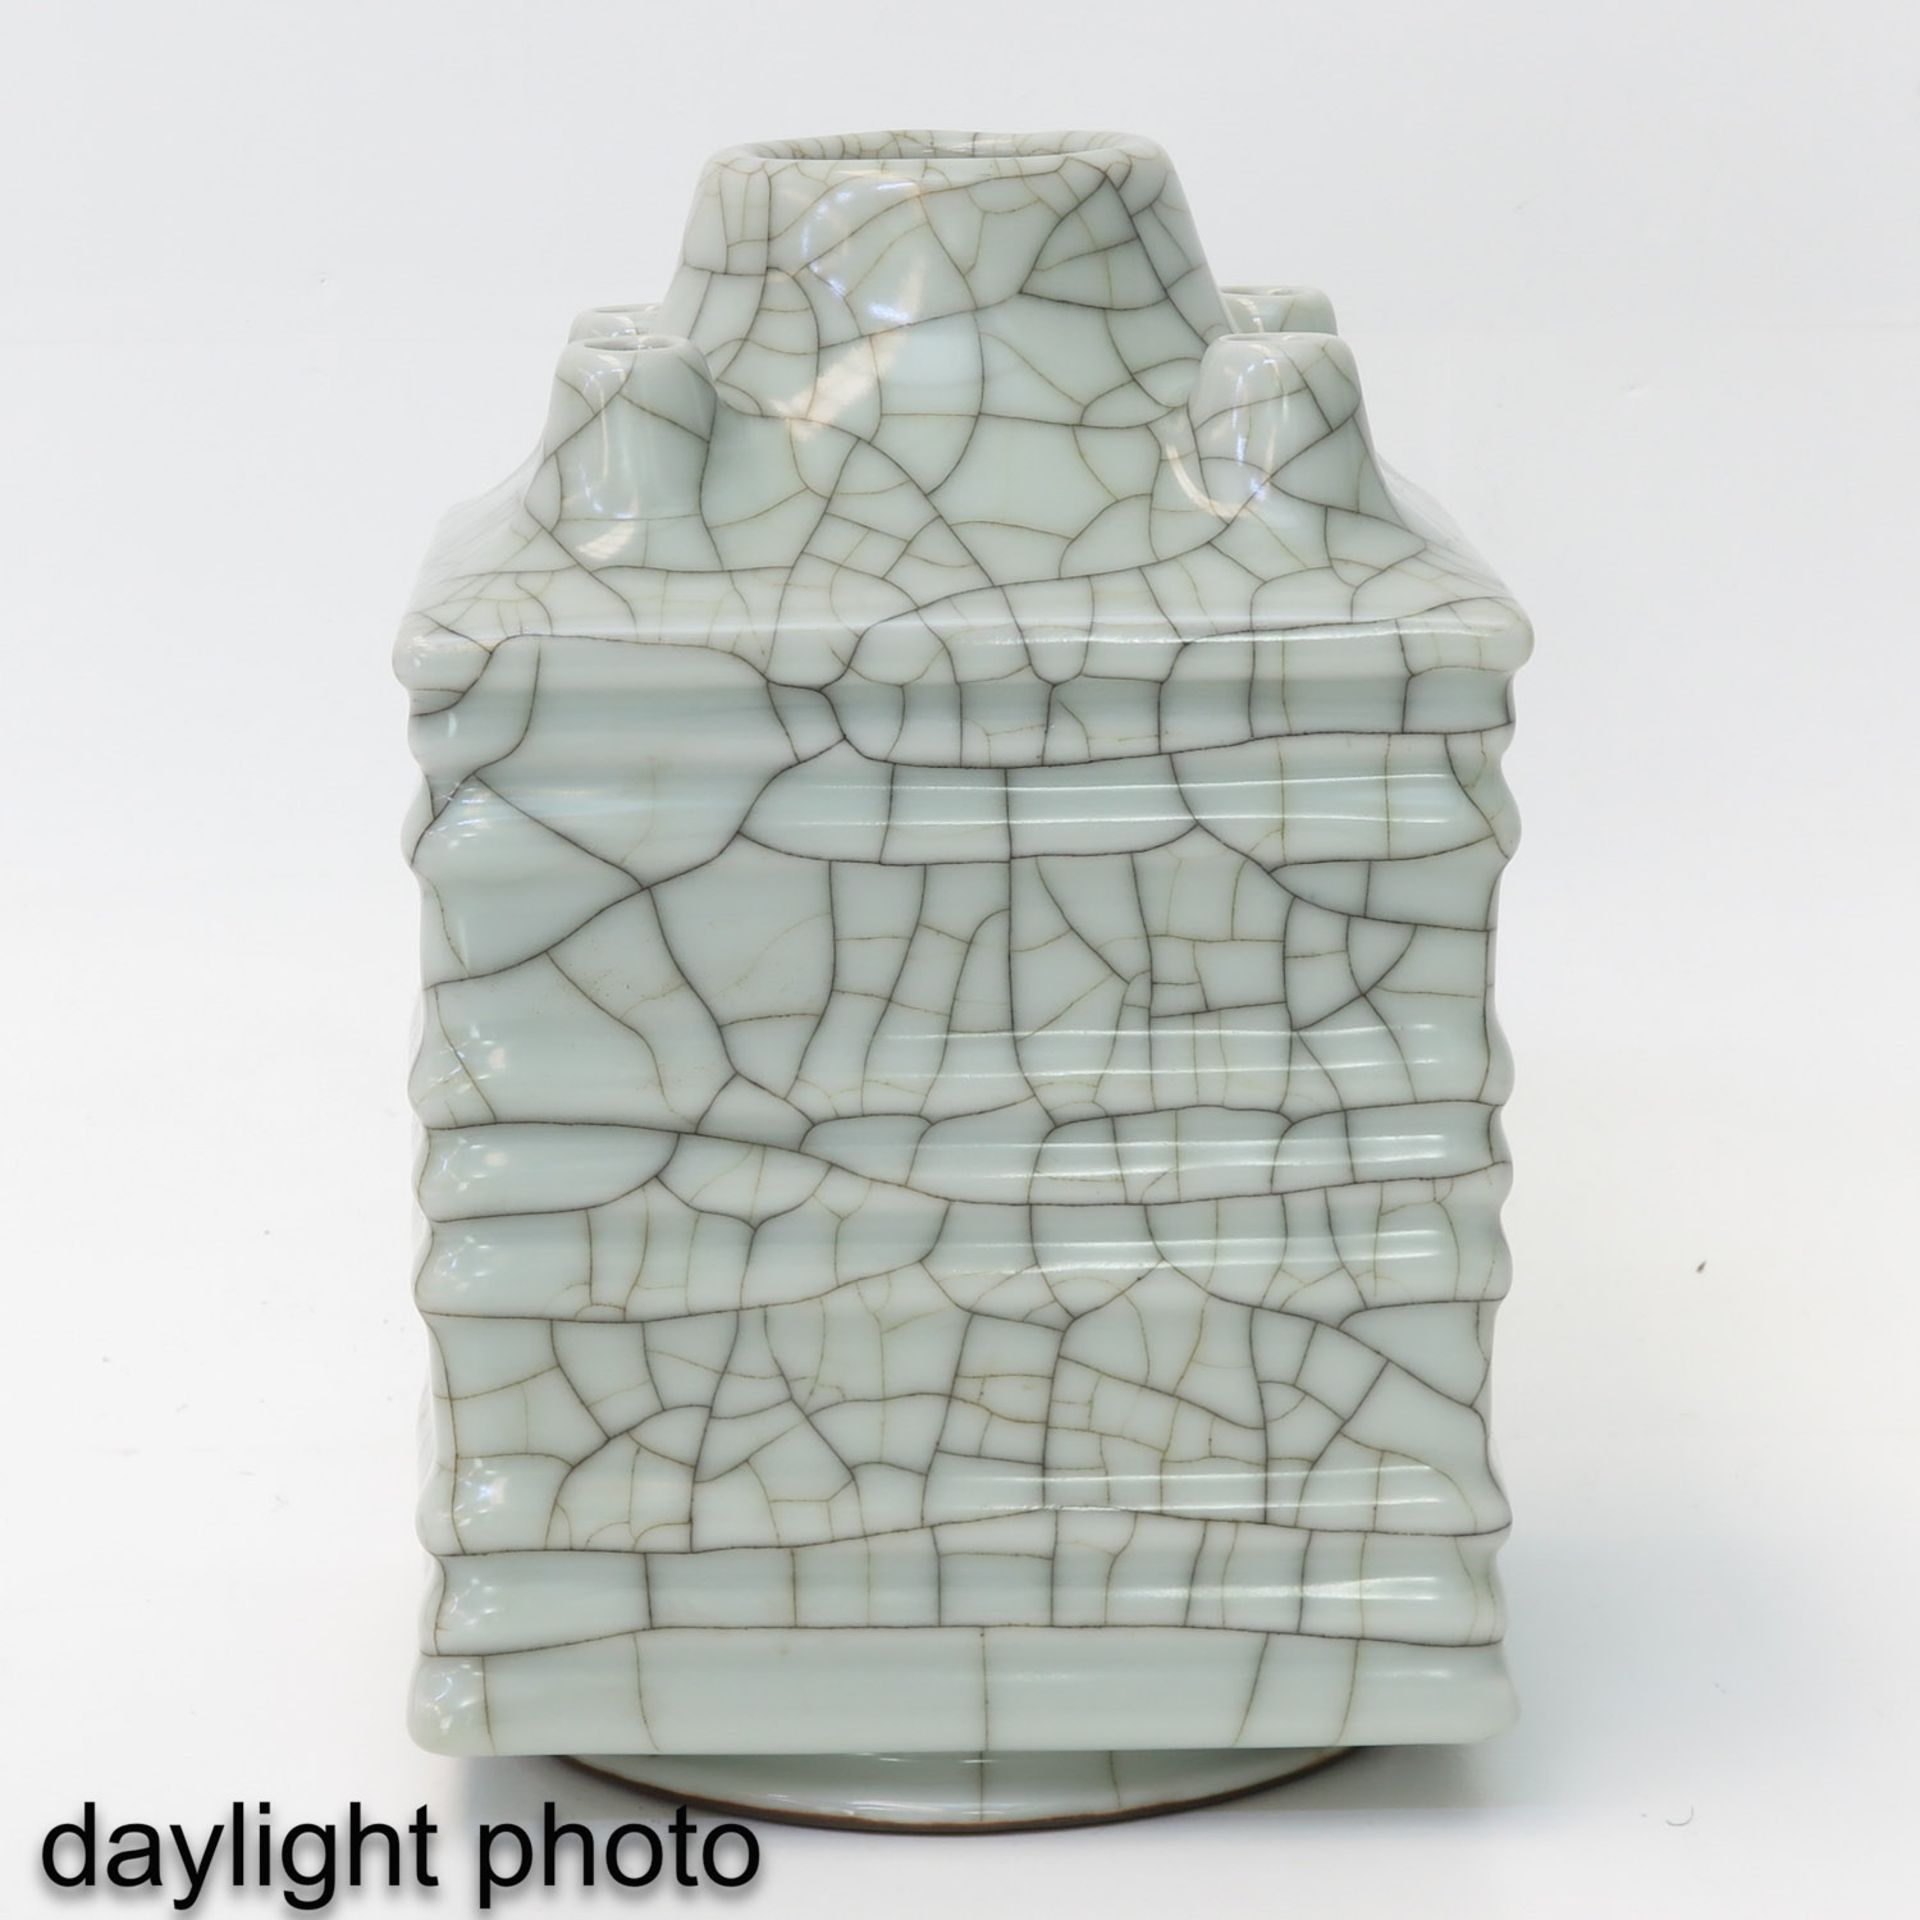 A Crackle Decor Square Vase - Image 7 of 10